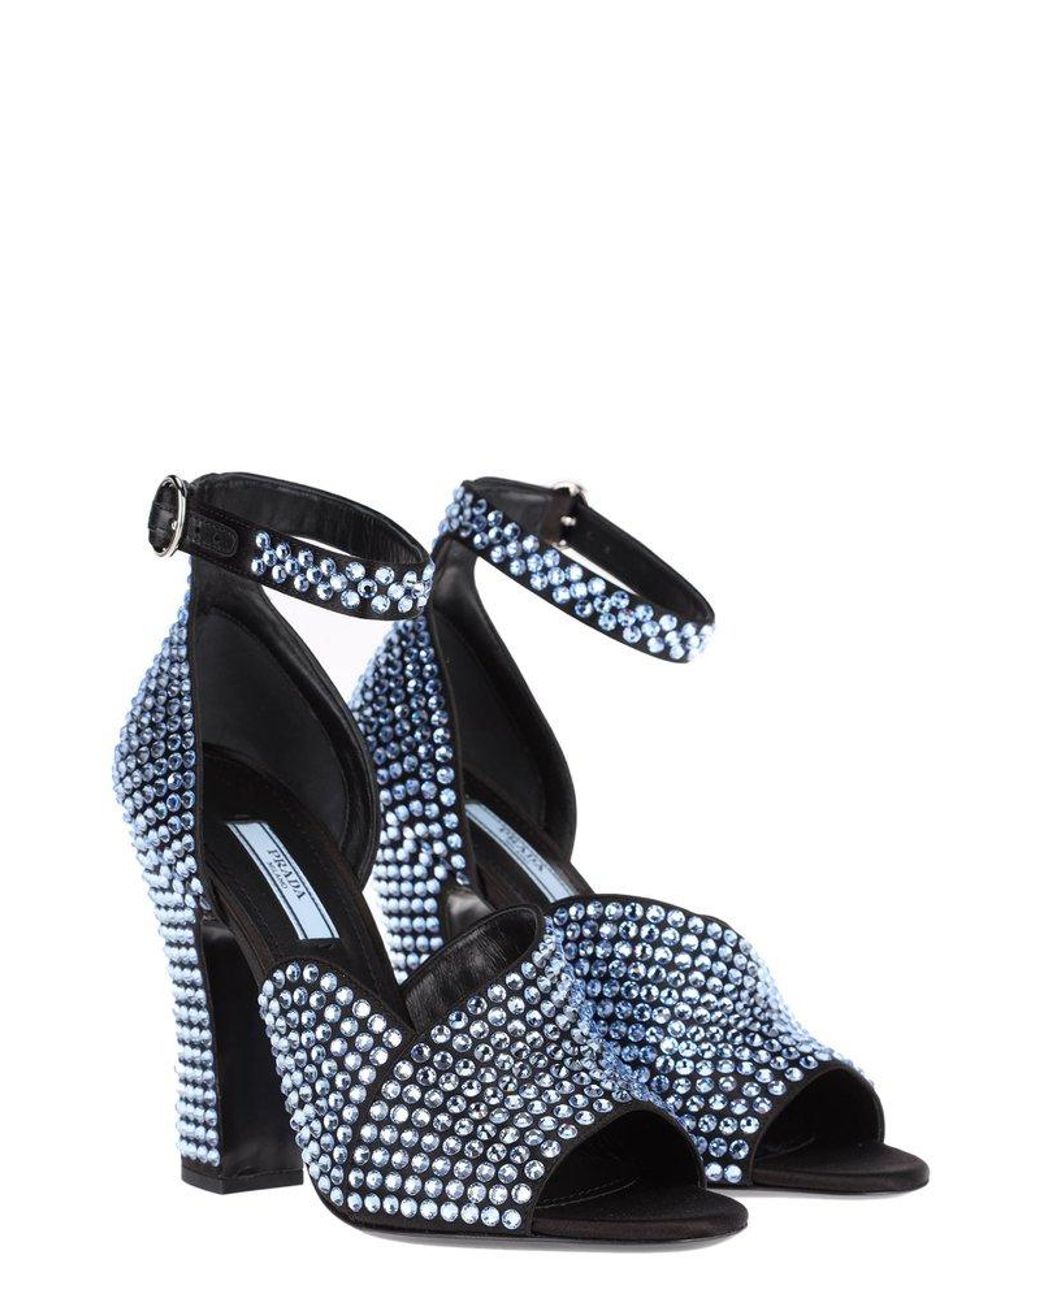 Stiletto | Sandals | Shoes | Women's Sandals - Crystal Sandals Open Toe  Stiletto High Heel - Aliexpress